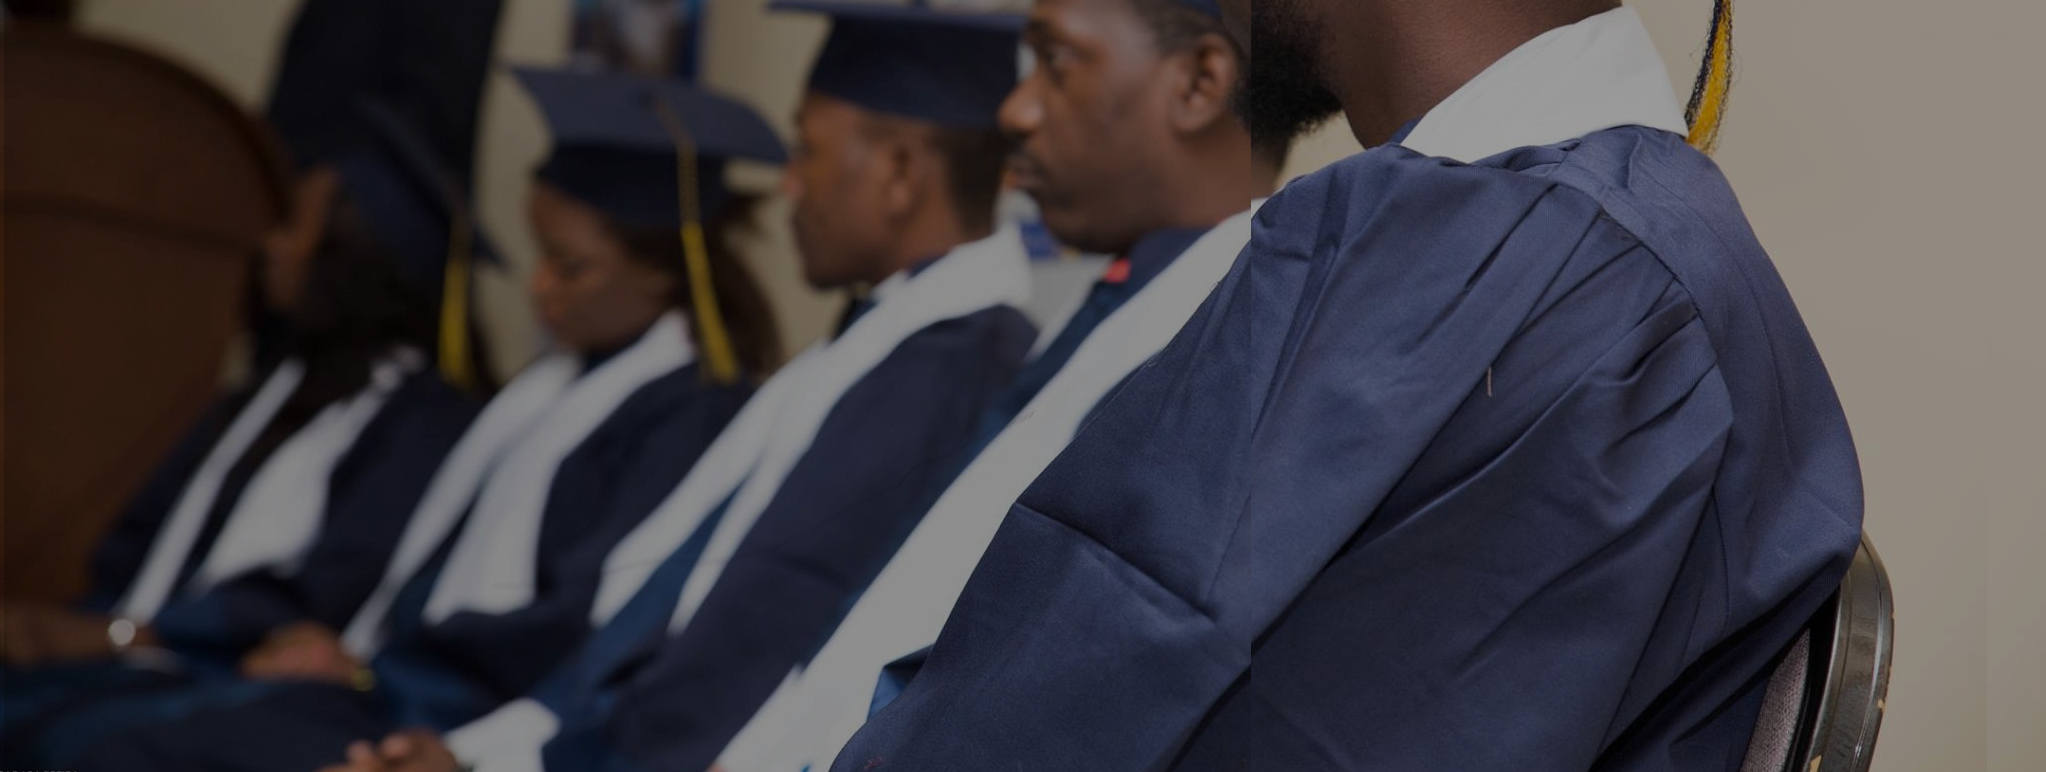 Graduation promotion Koffi Annan 2020-2021